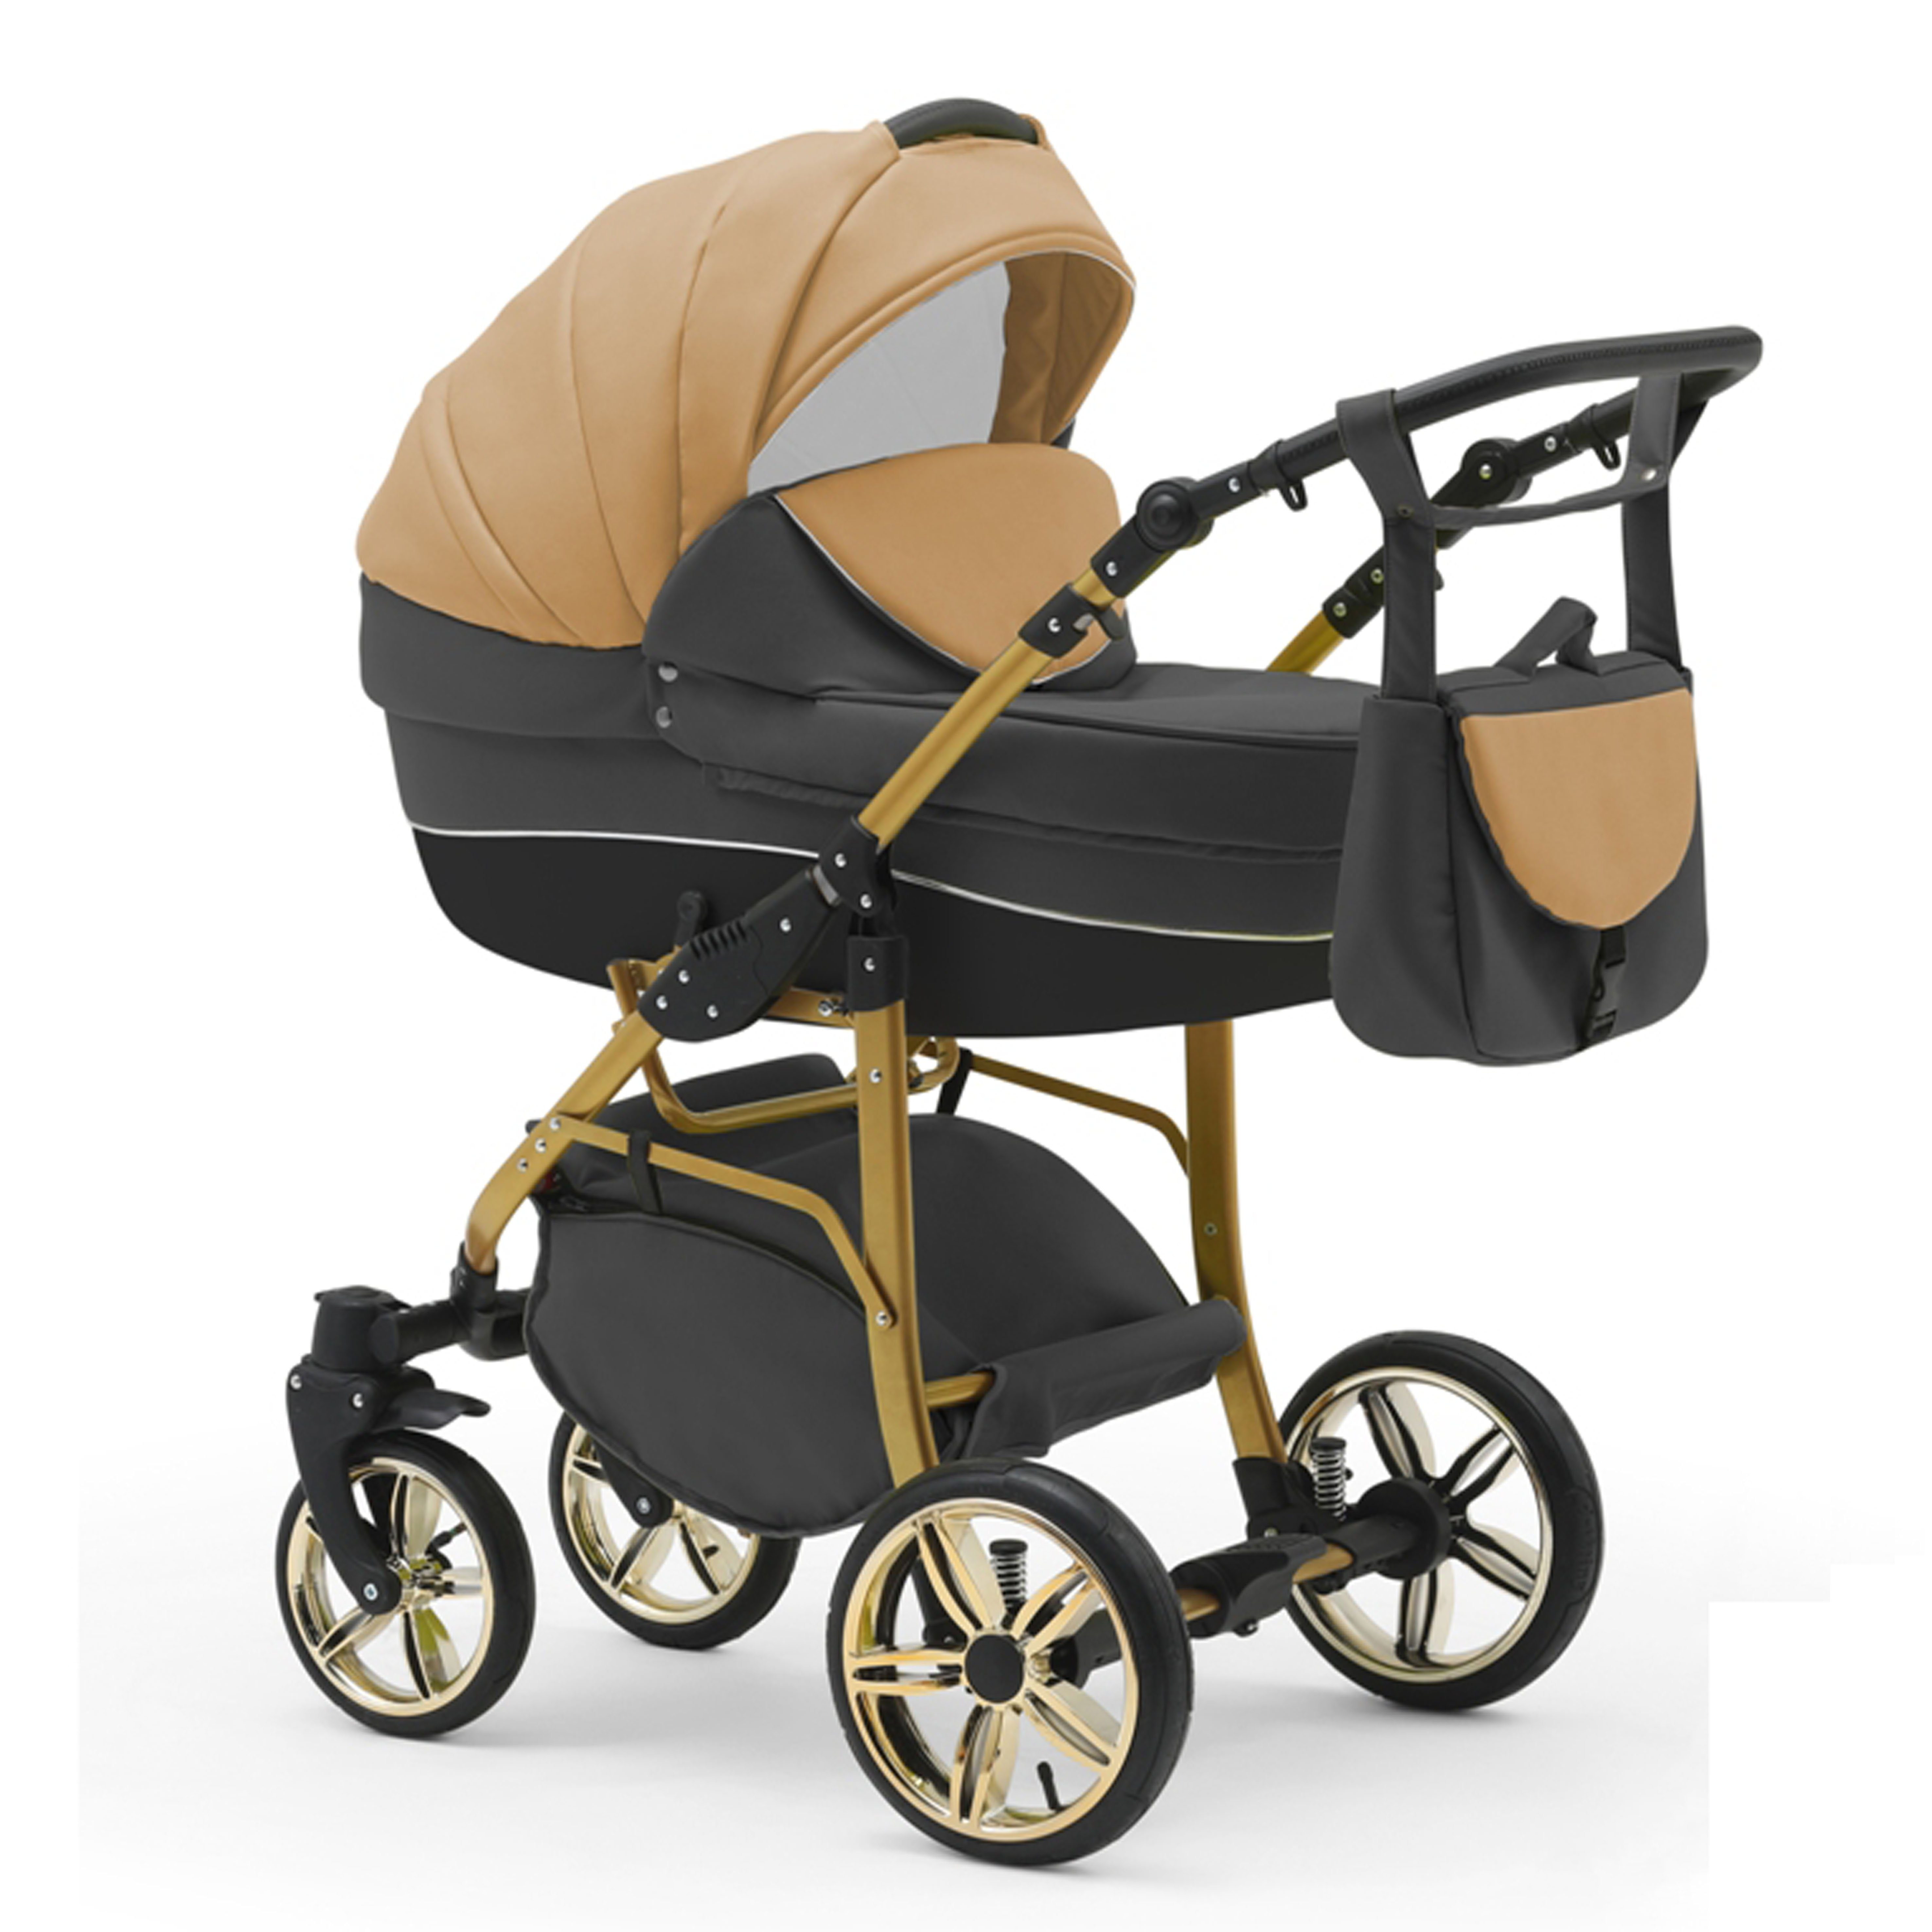 Grau-Beige-Schwarz - 13 Kombi-Kinderwagen 2 Kinderwagen-Set in Gold Farben in 1 46 - babies-on-wheels Cosmo Teile